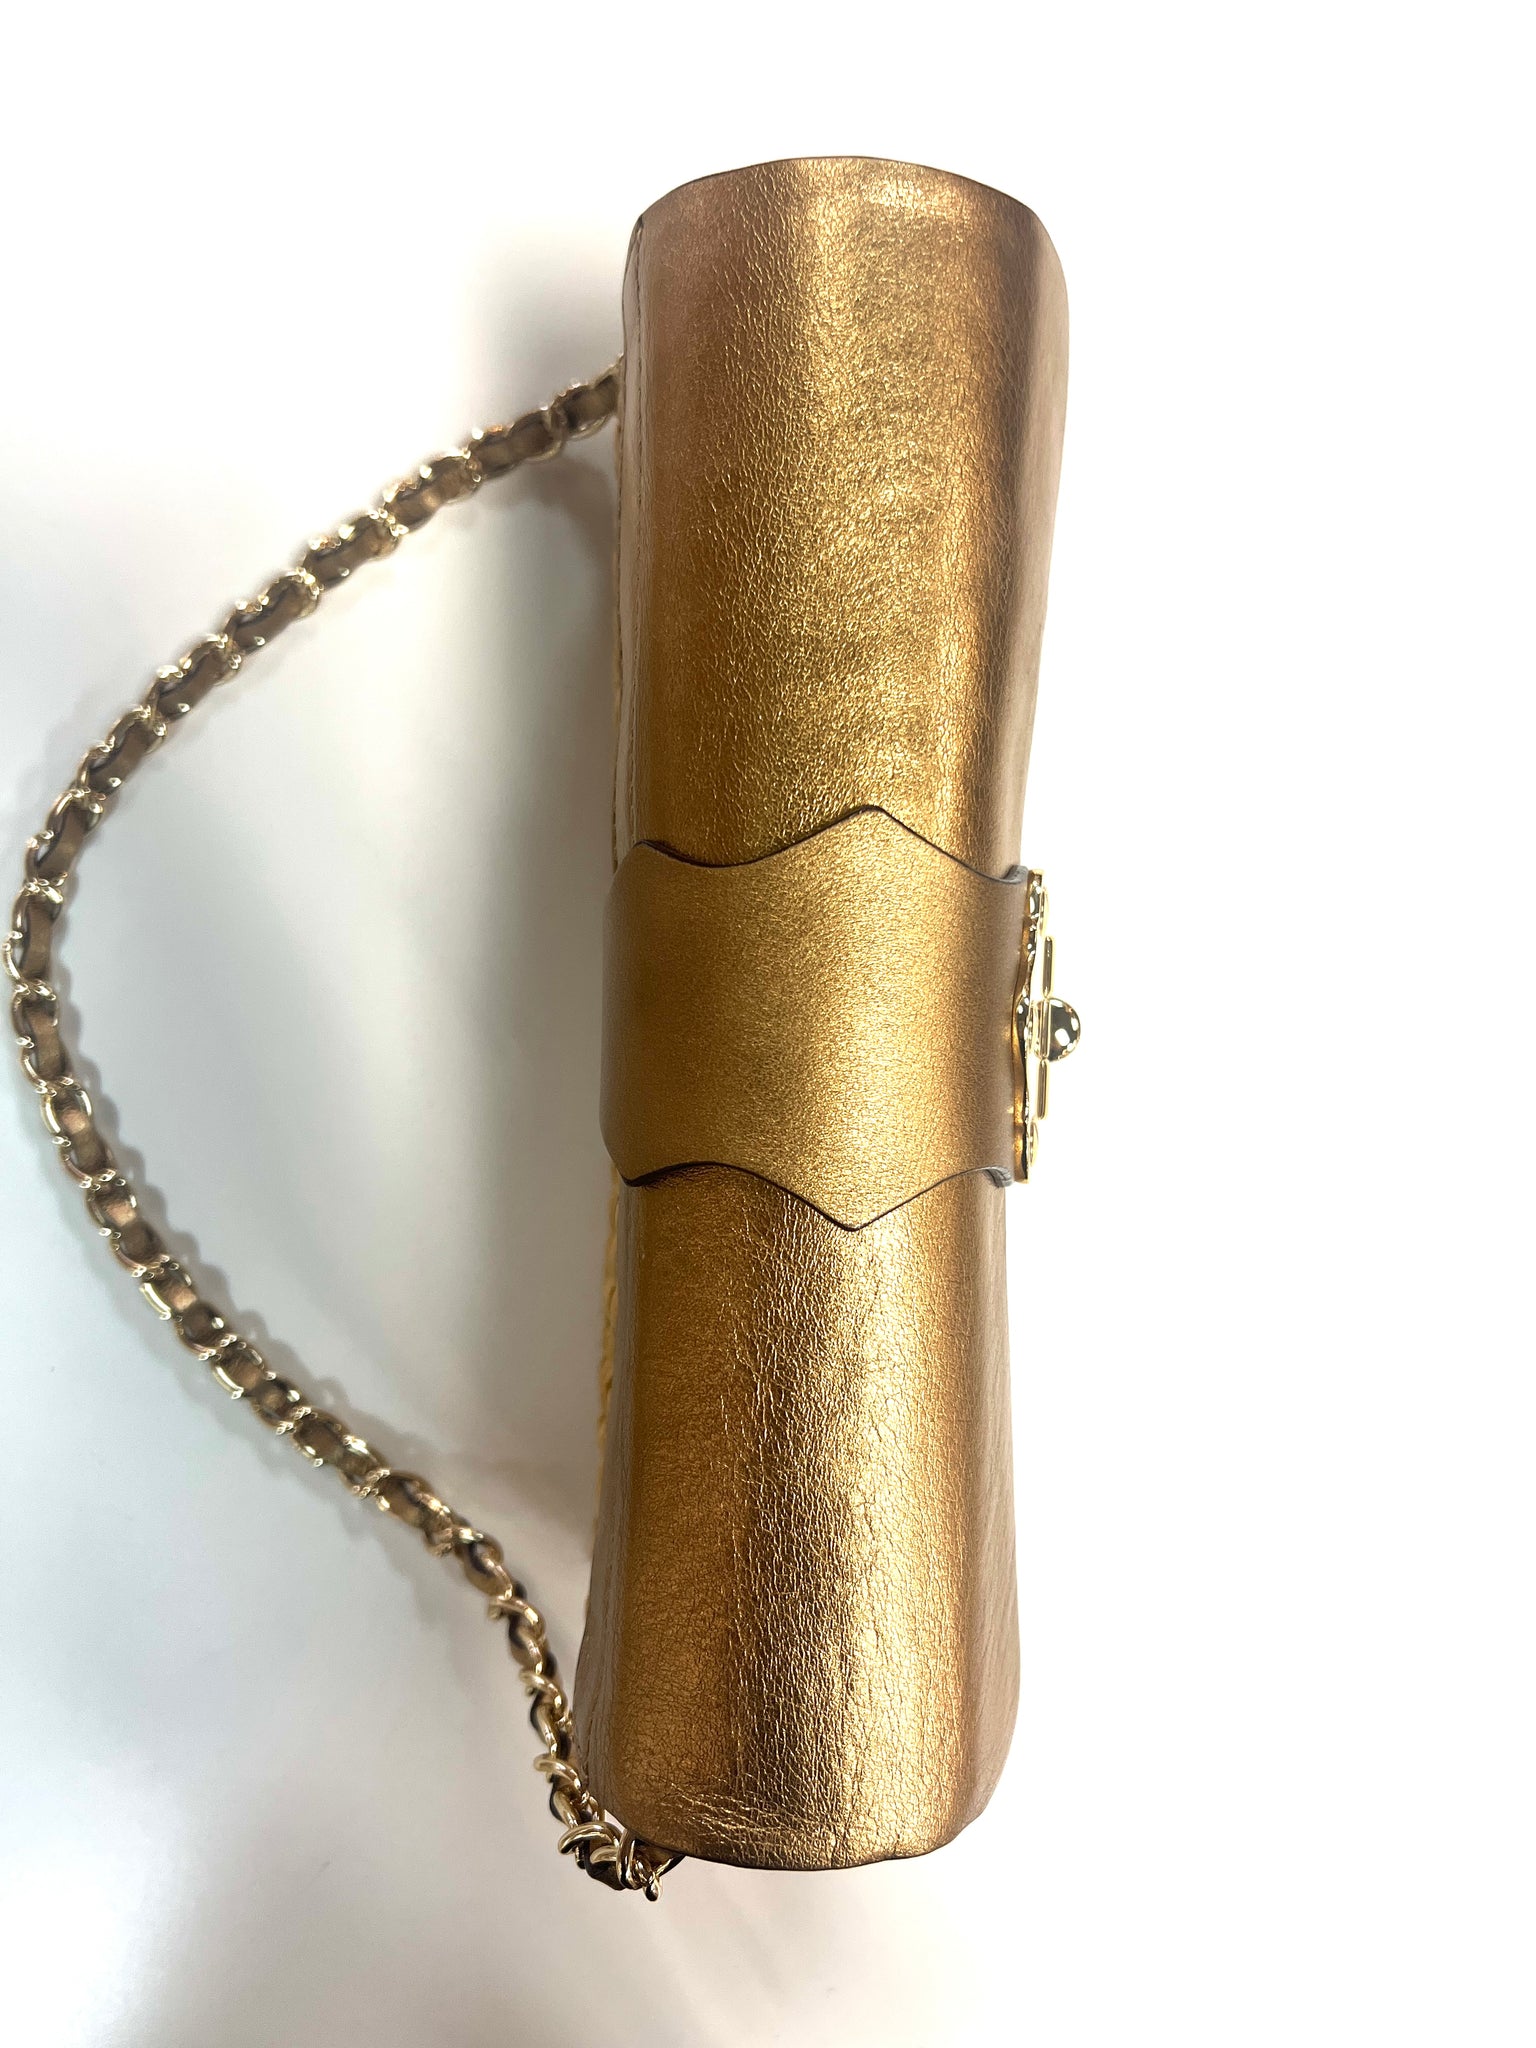 Michael Kors Silver Crackled Metallic 2 in 1 Crossbody Purse - Women's  handbags